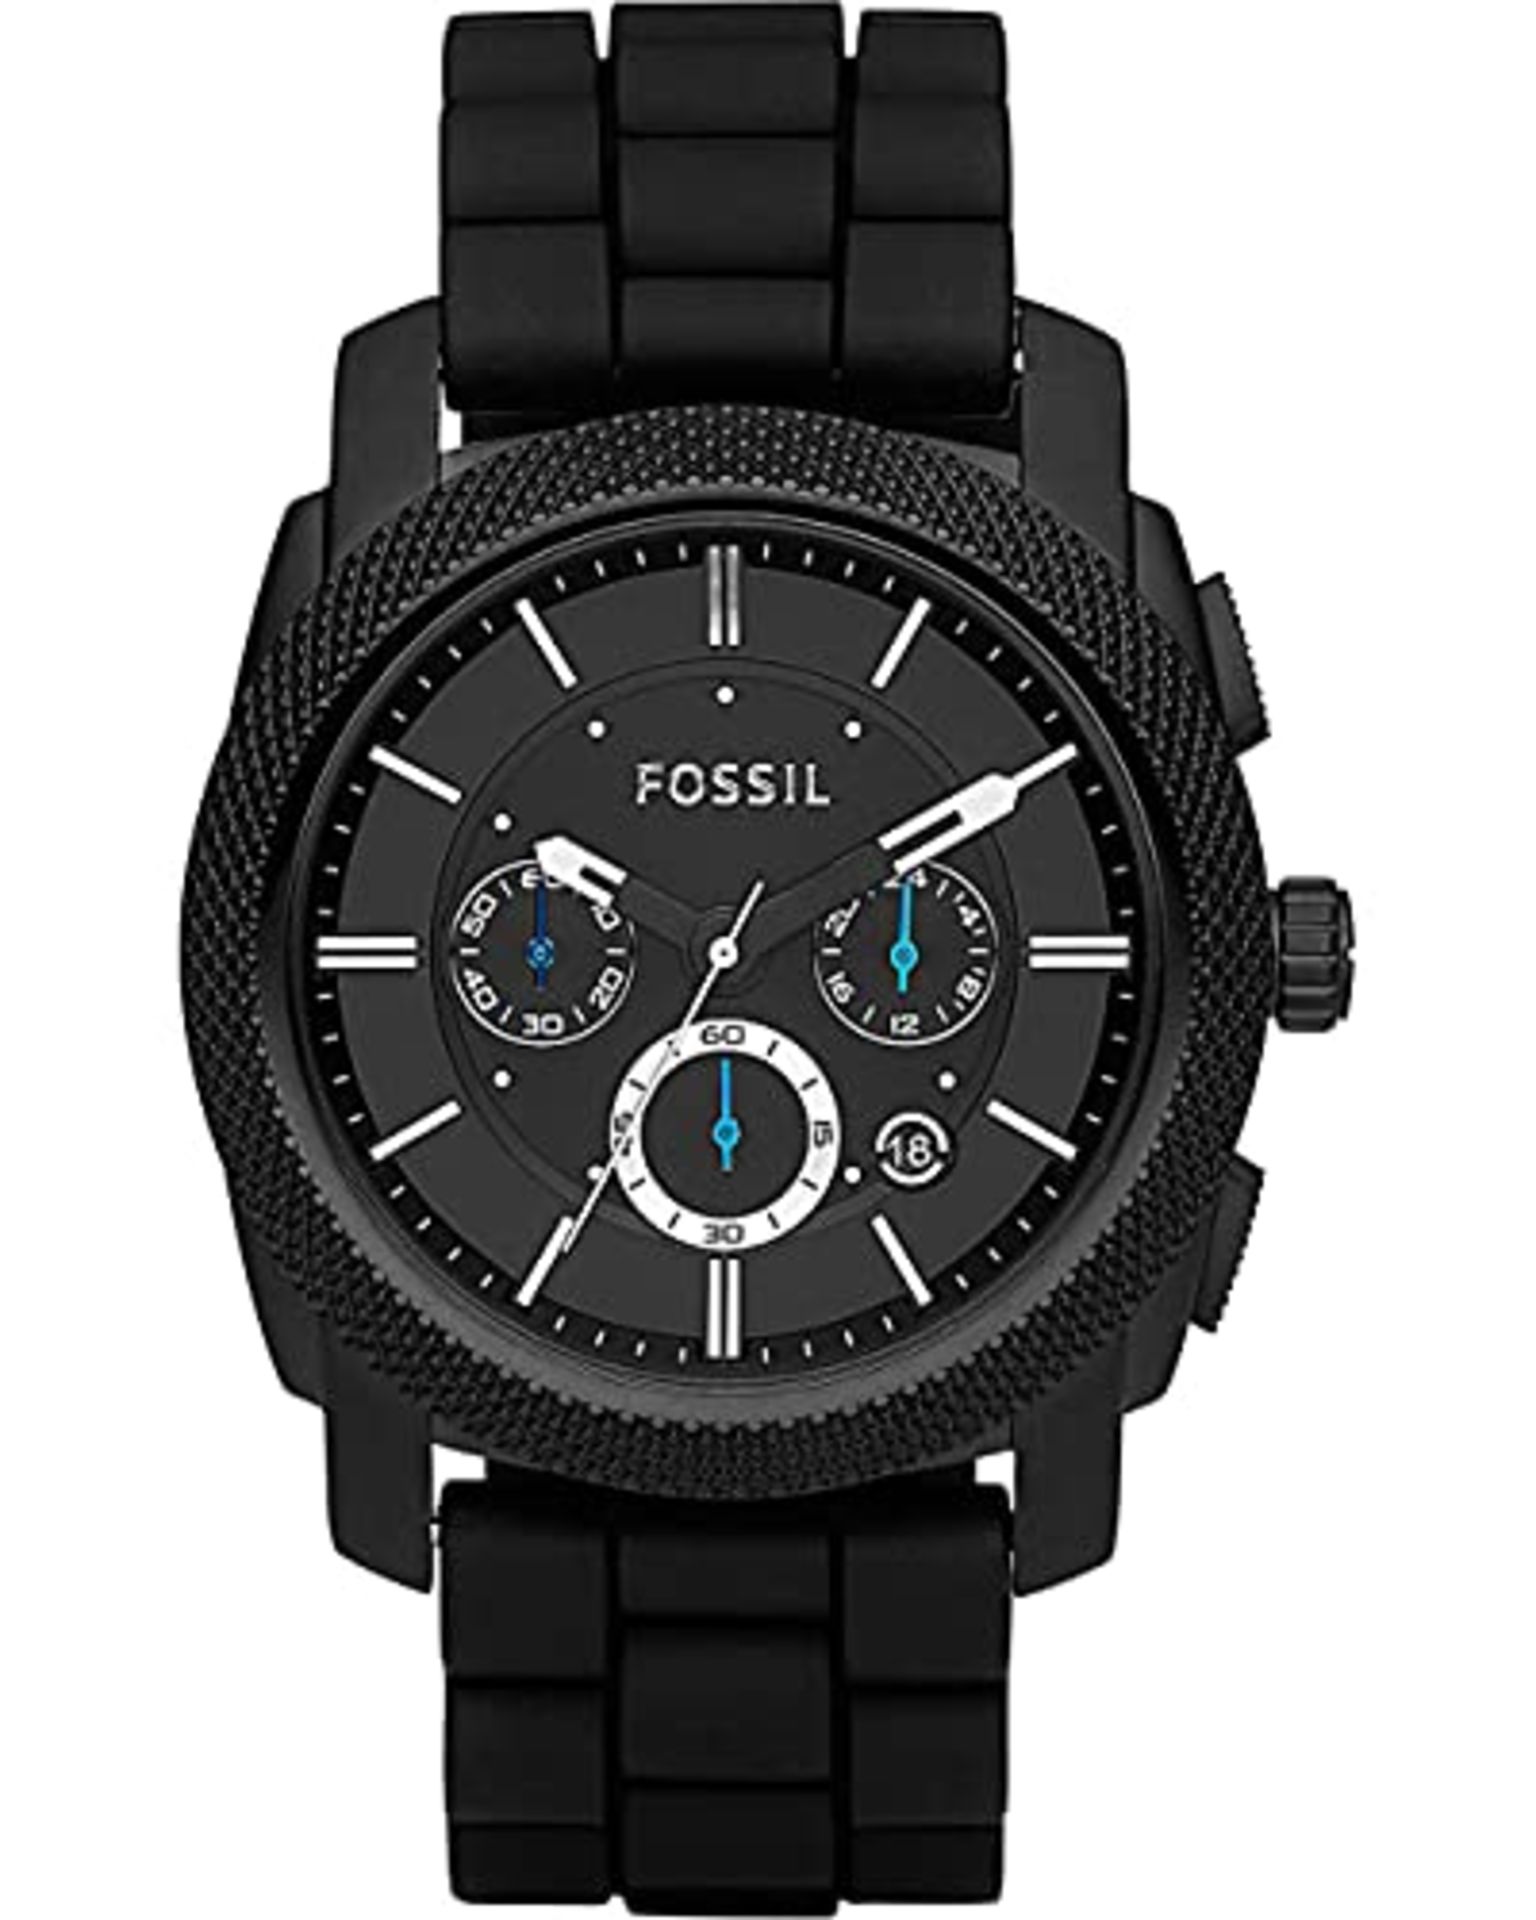 RRP £126.00 Fossil men's watch, 45mm case size, quartz chronograph movement, silicone strap